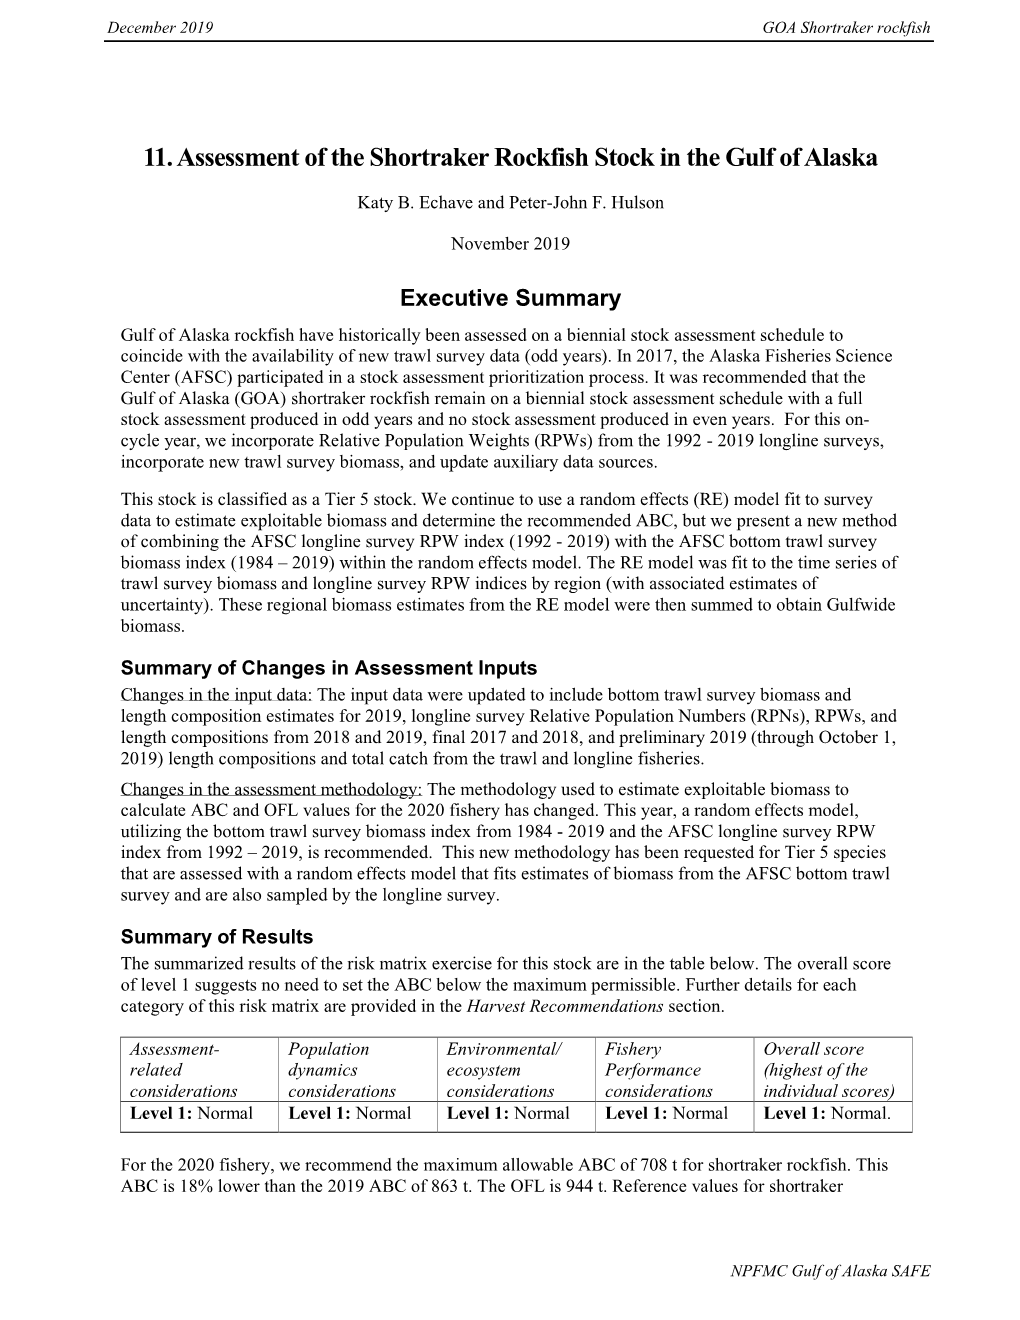 Assessment of the Shortraker Rockfish Stock in the Gulf of Alaska